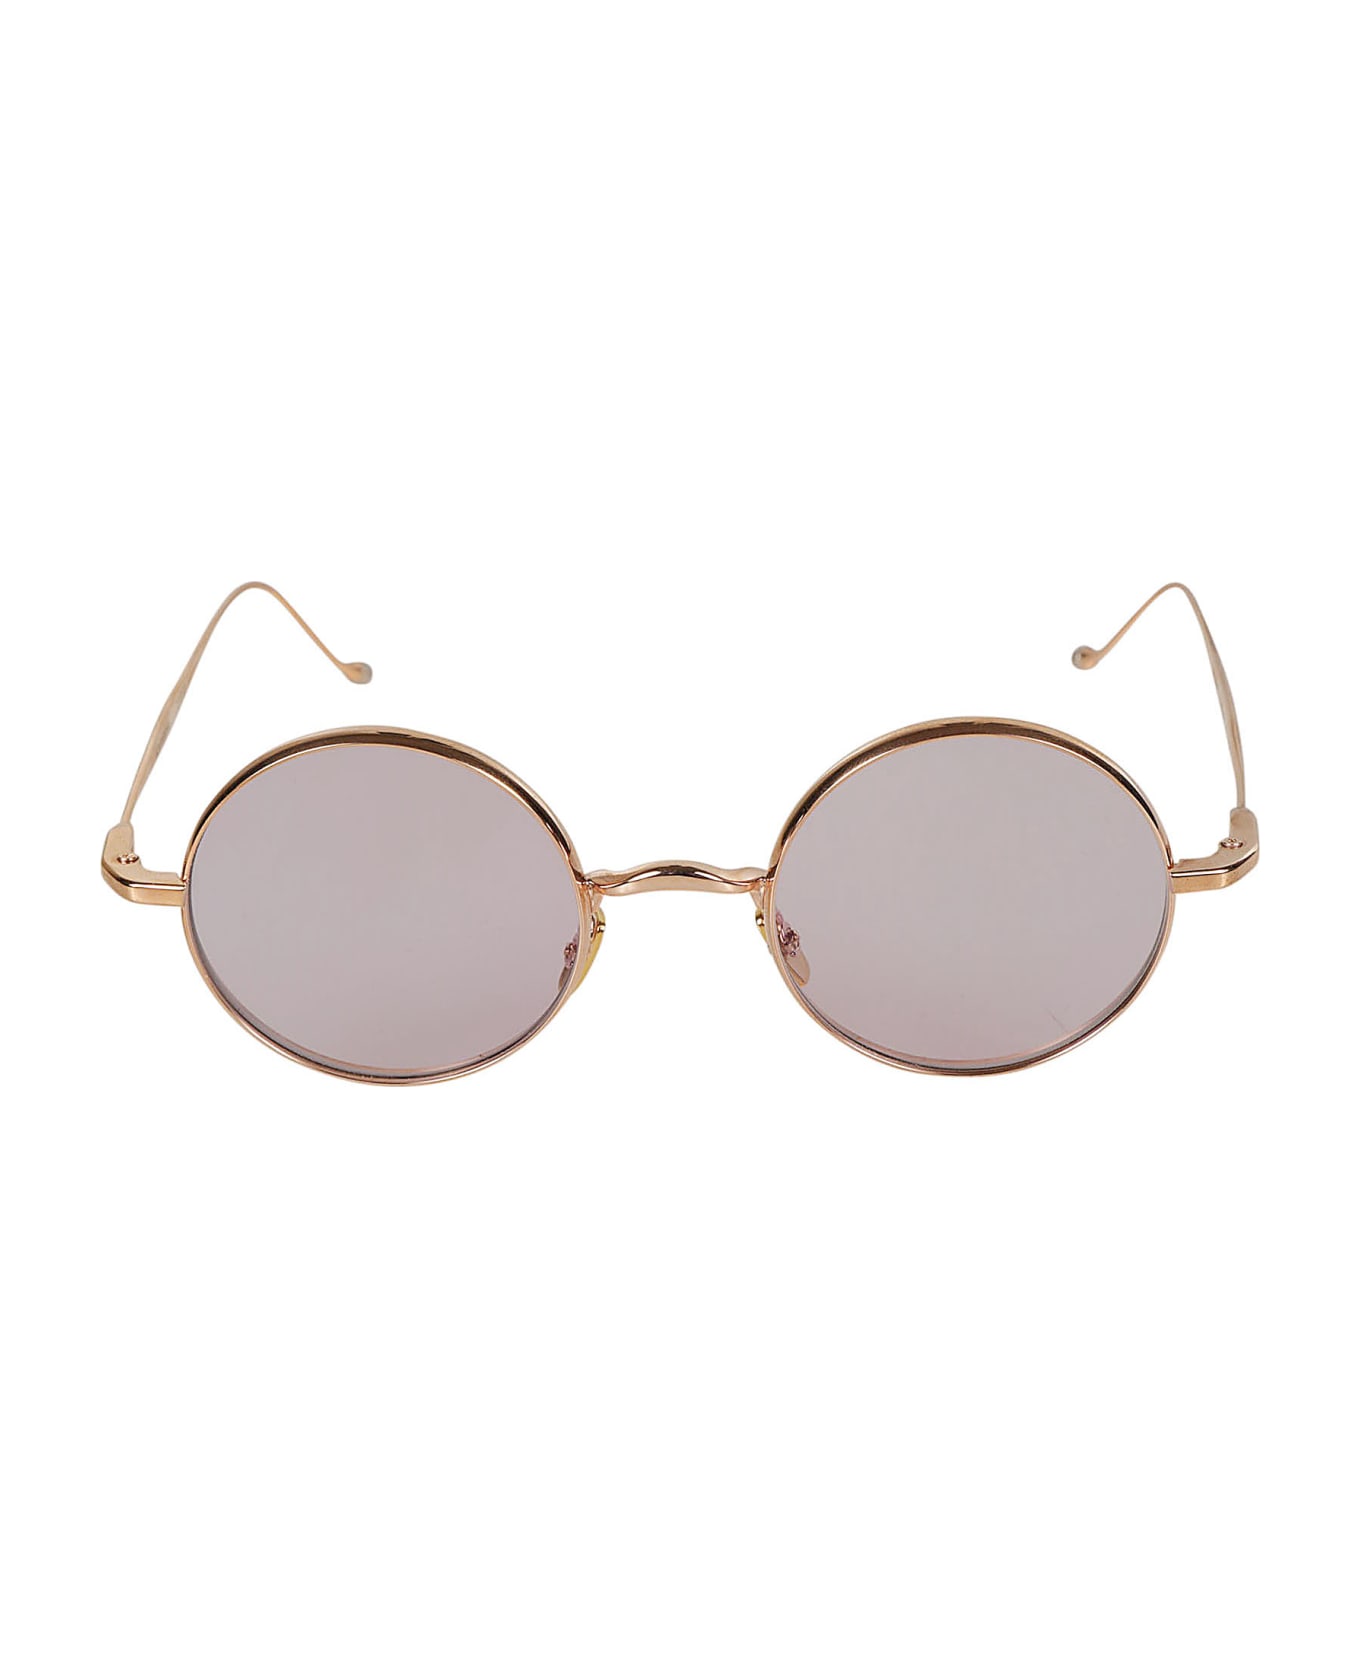 Jacques Marie Mage Diana Sunglasses Sunglasses - Rose Gold